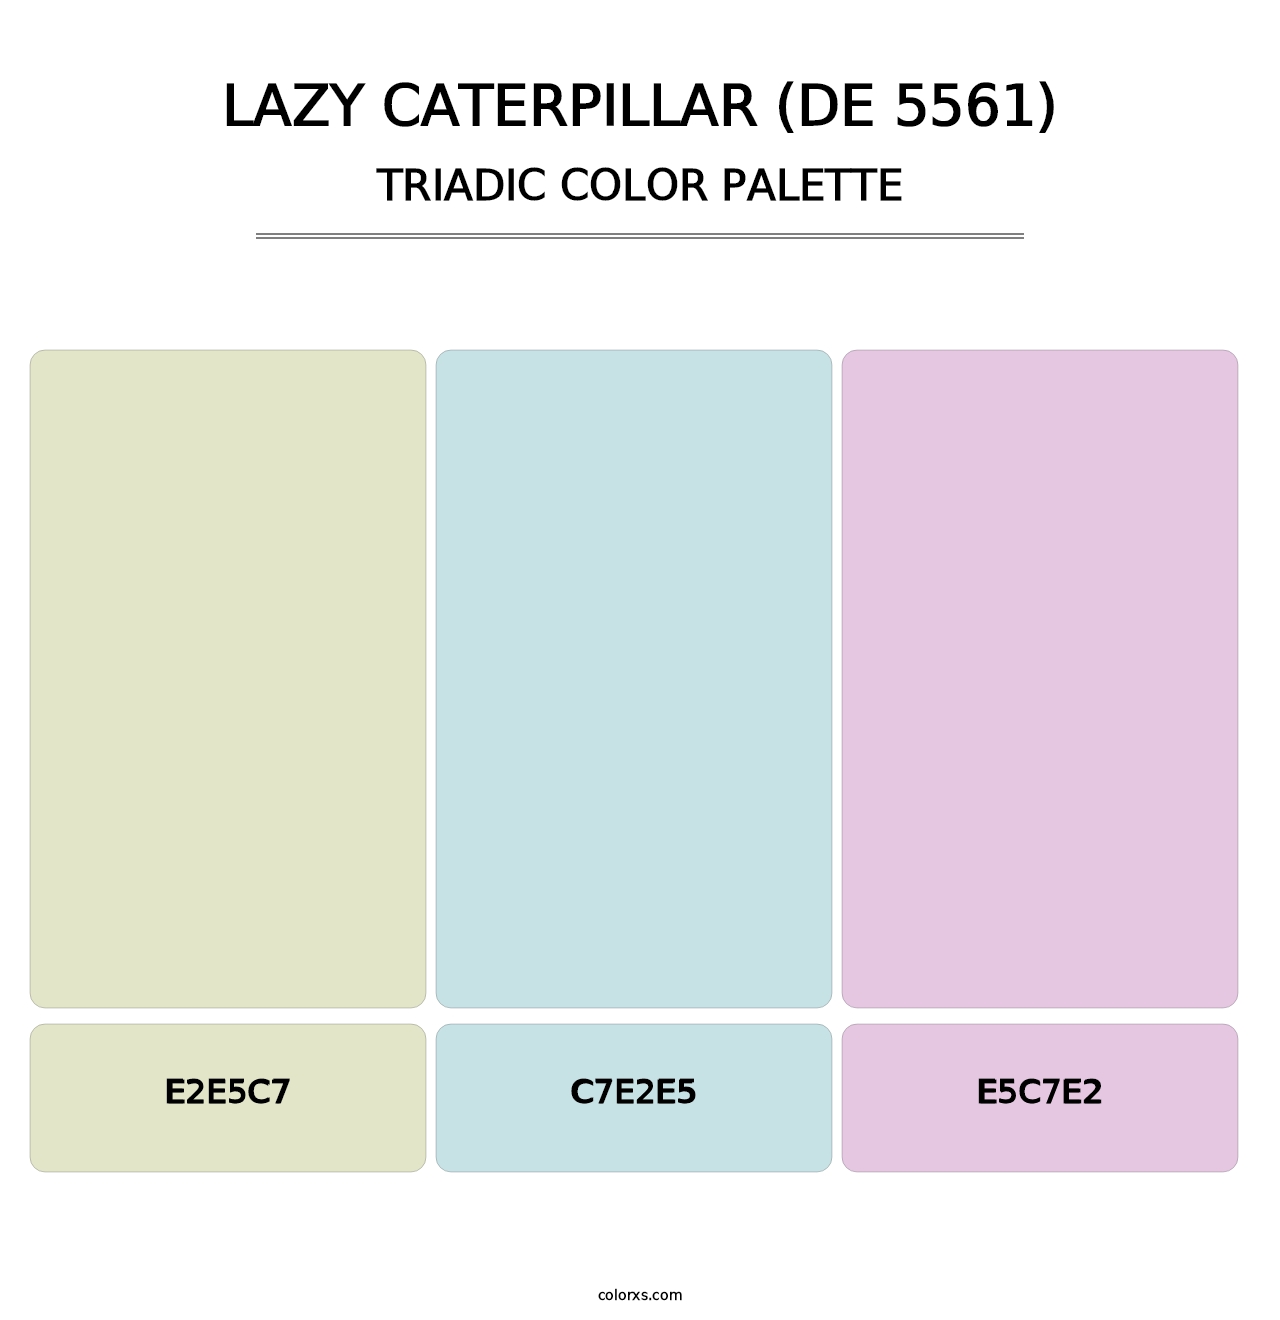 Lazy Caterpillar (DE 5561) - Triadic Color Palette